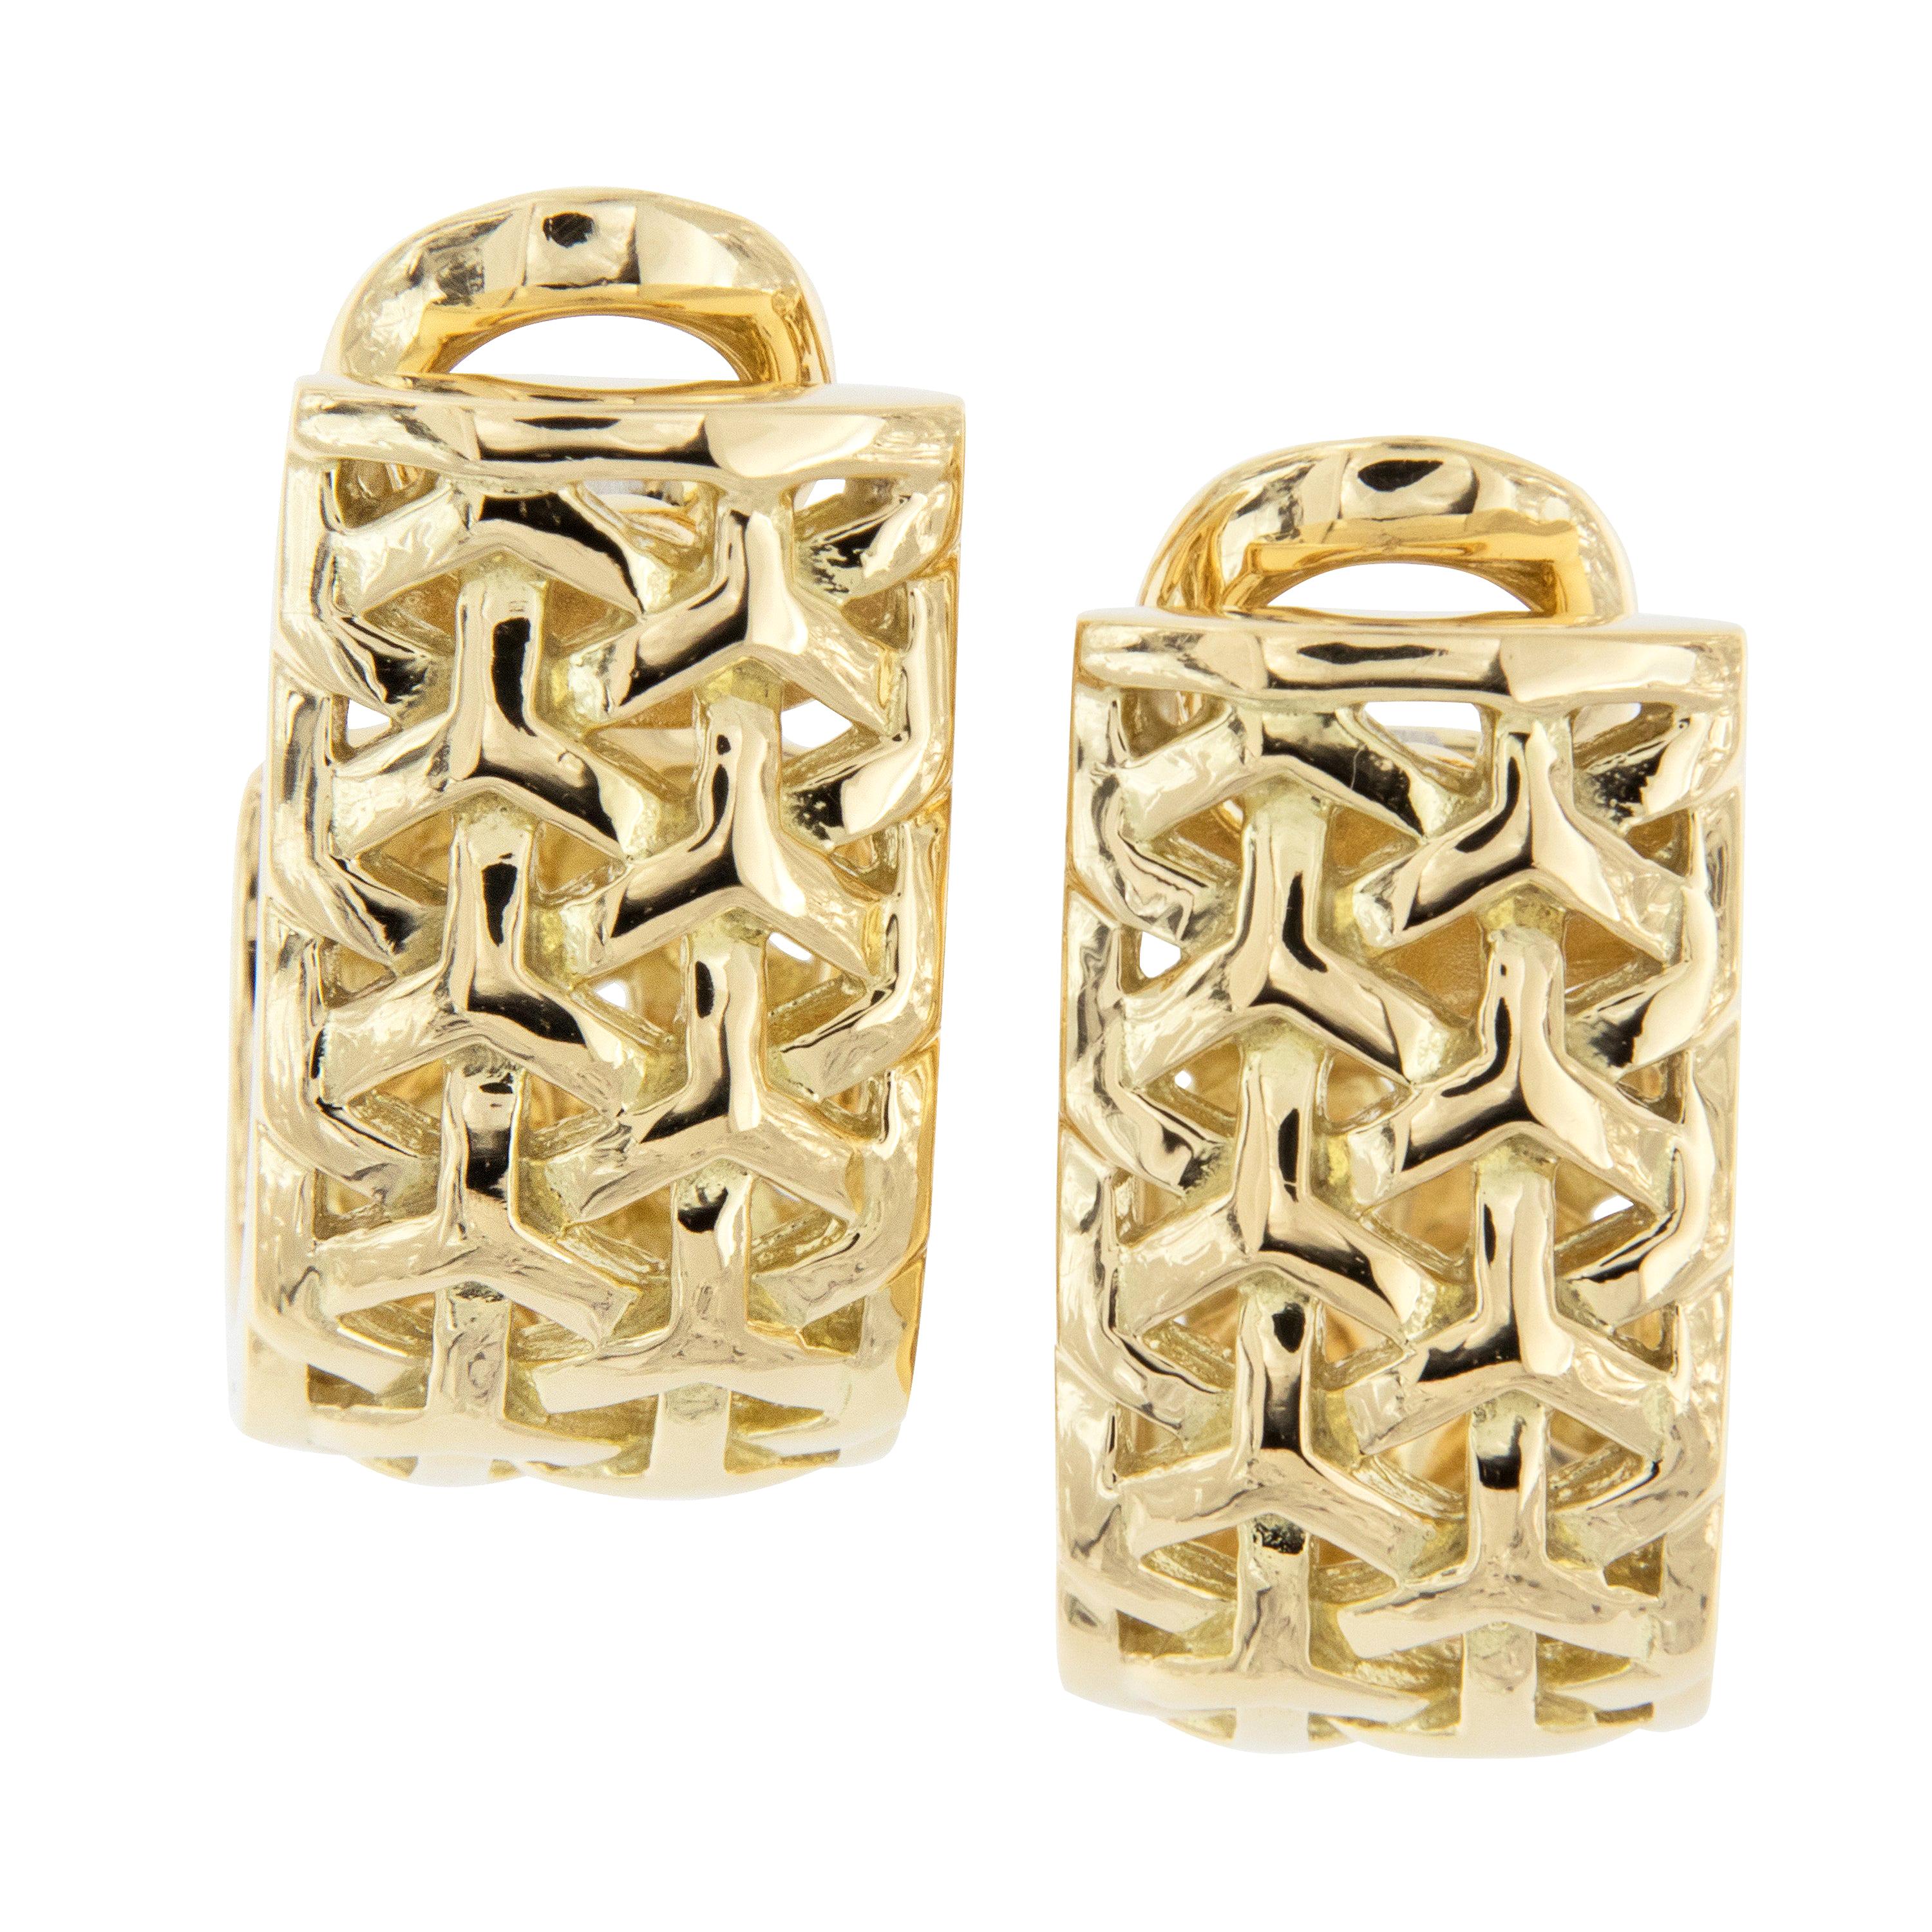 18 Karat Yellow Gold "Y Knot" Earrings by Gemlok